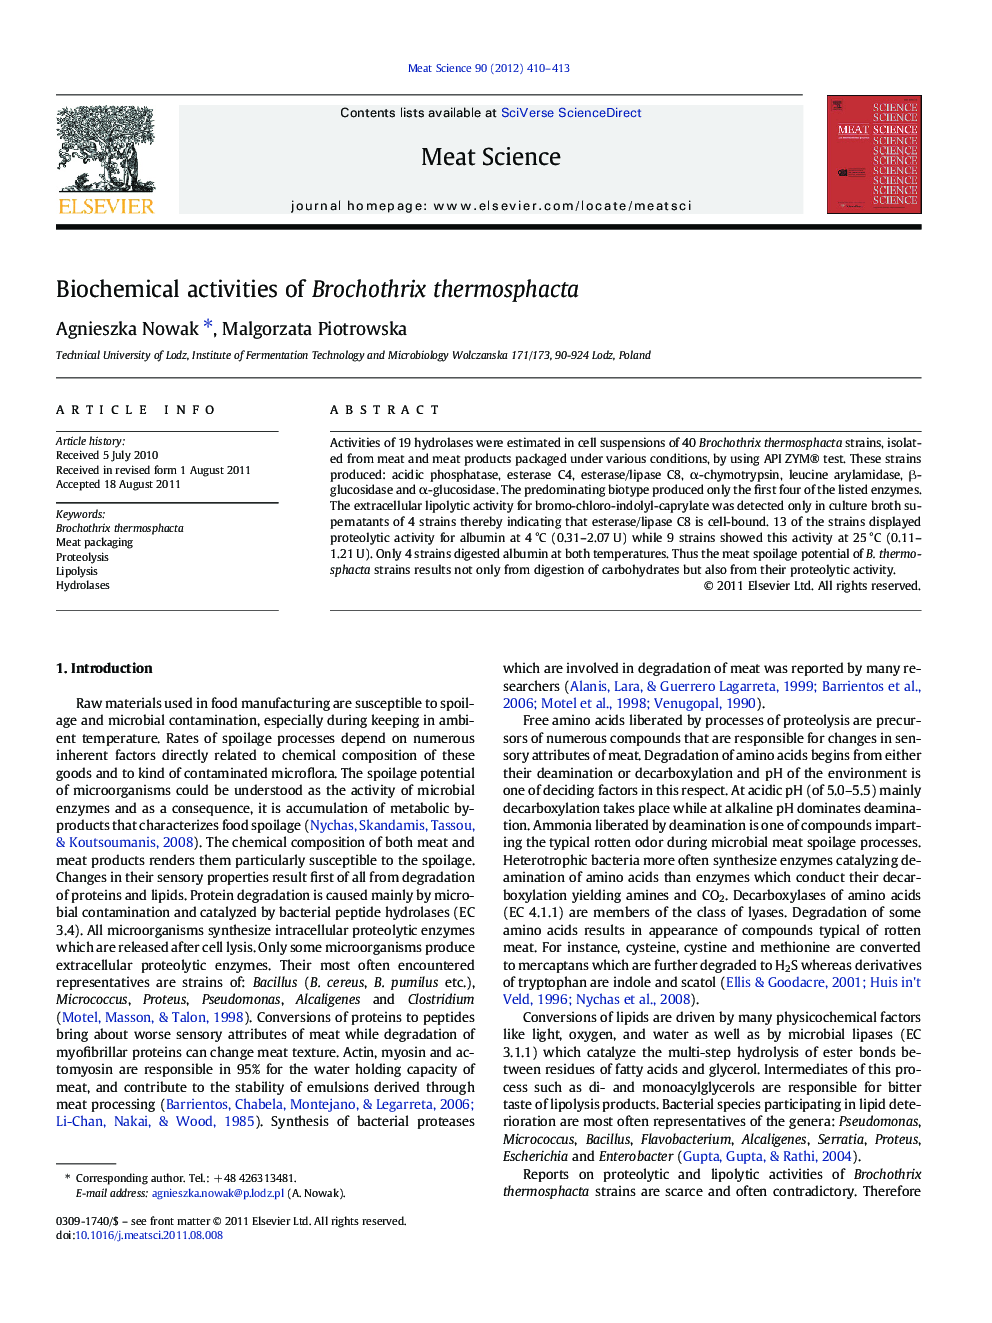 Biochemical activities of Brochothrix thermosphacta